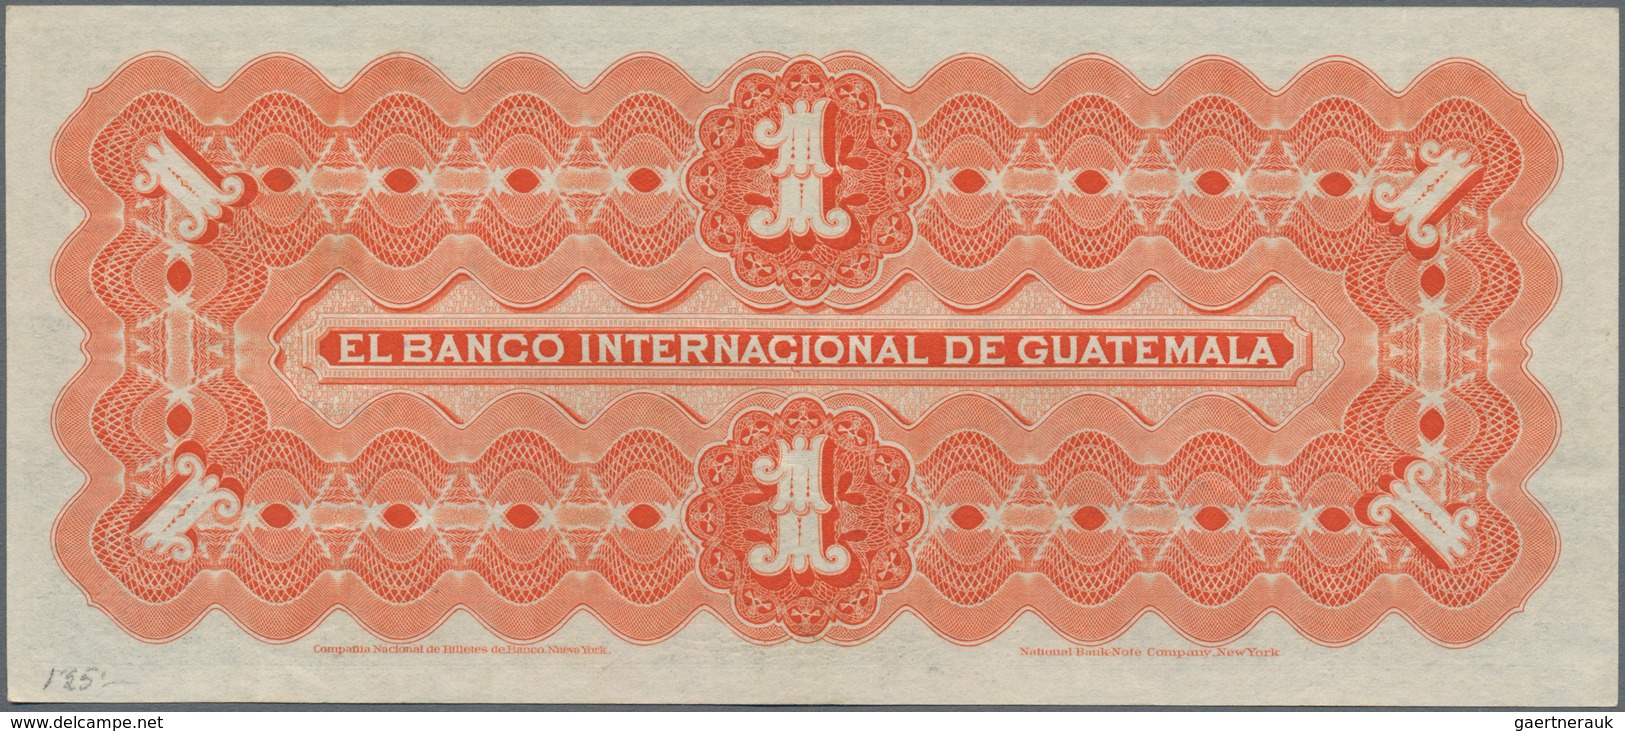 Guatemala: Very Nice Set With 3 Banknotes Containing For The Banco Intenacional De Guatemala 1 Peso - Guatemala